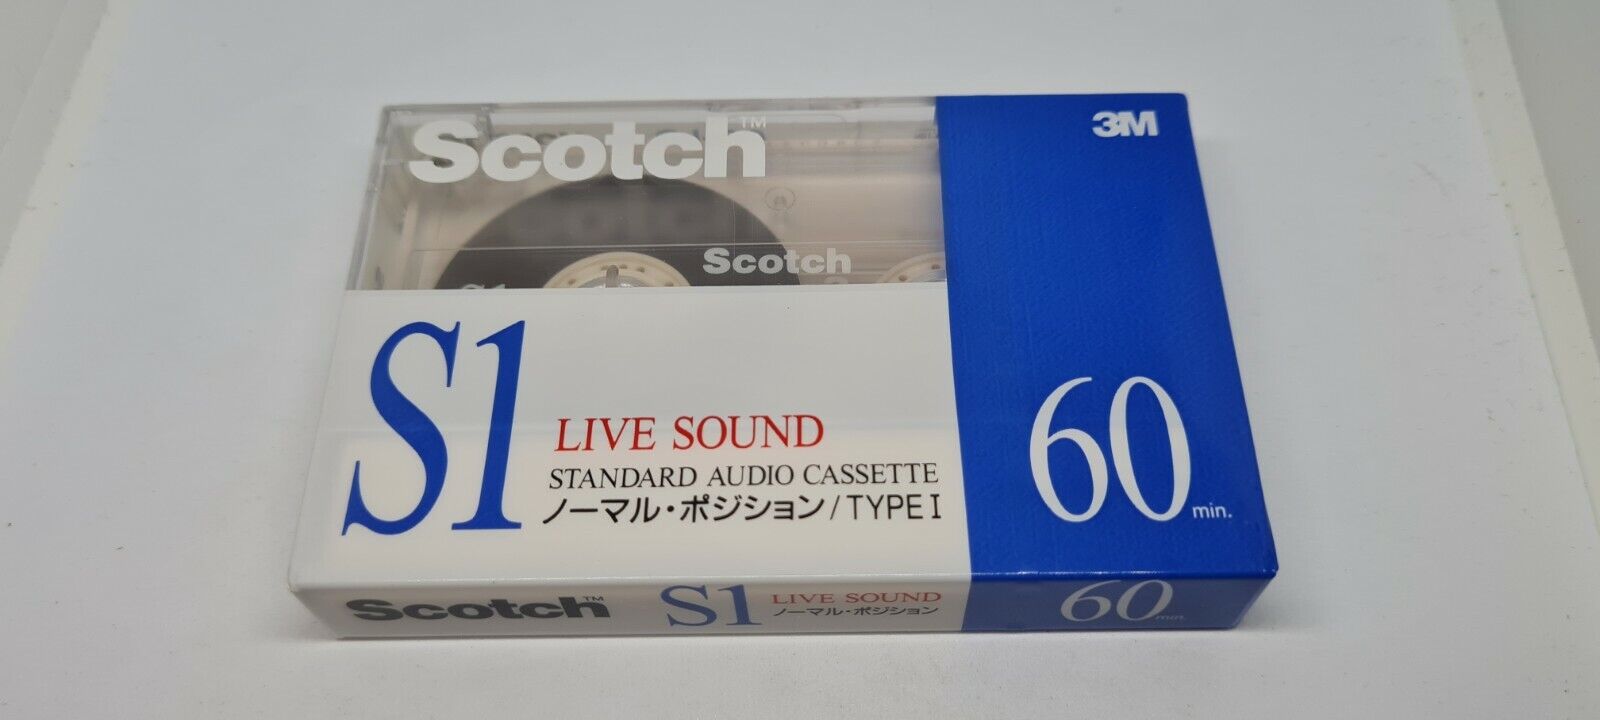 Scotch S1 60 shop Sealed NEW Tape Cassette